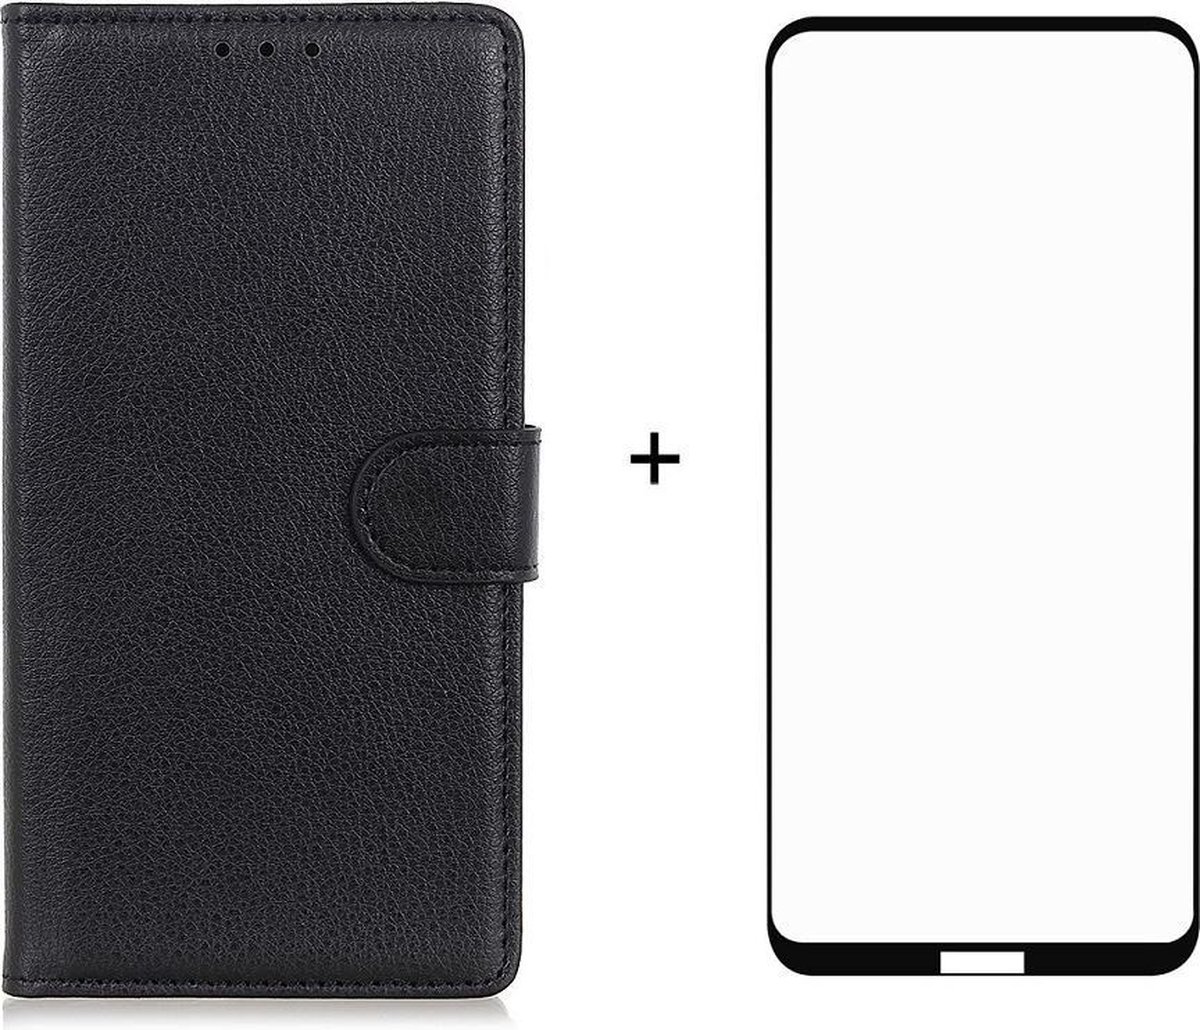 Nokia 5.4 zwart agenda book case hoesje + full glas screenprotector